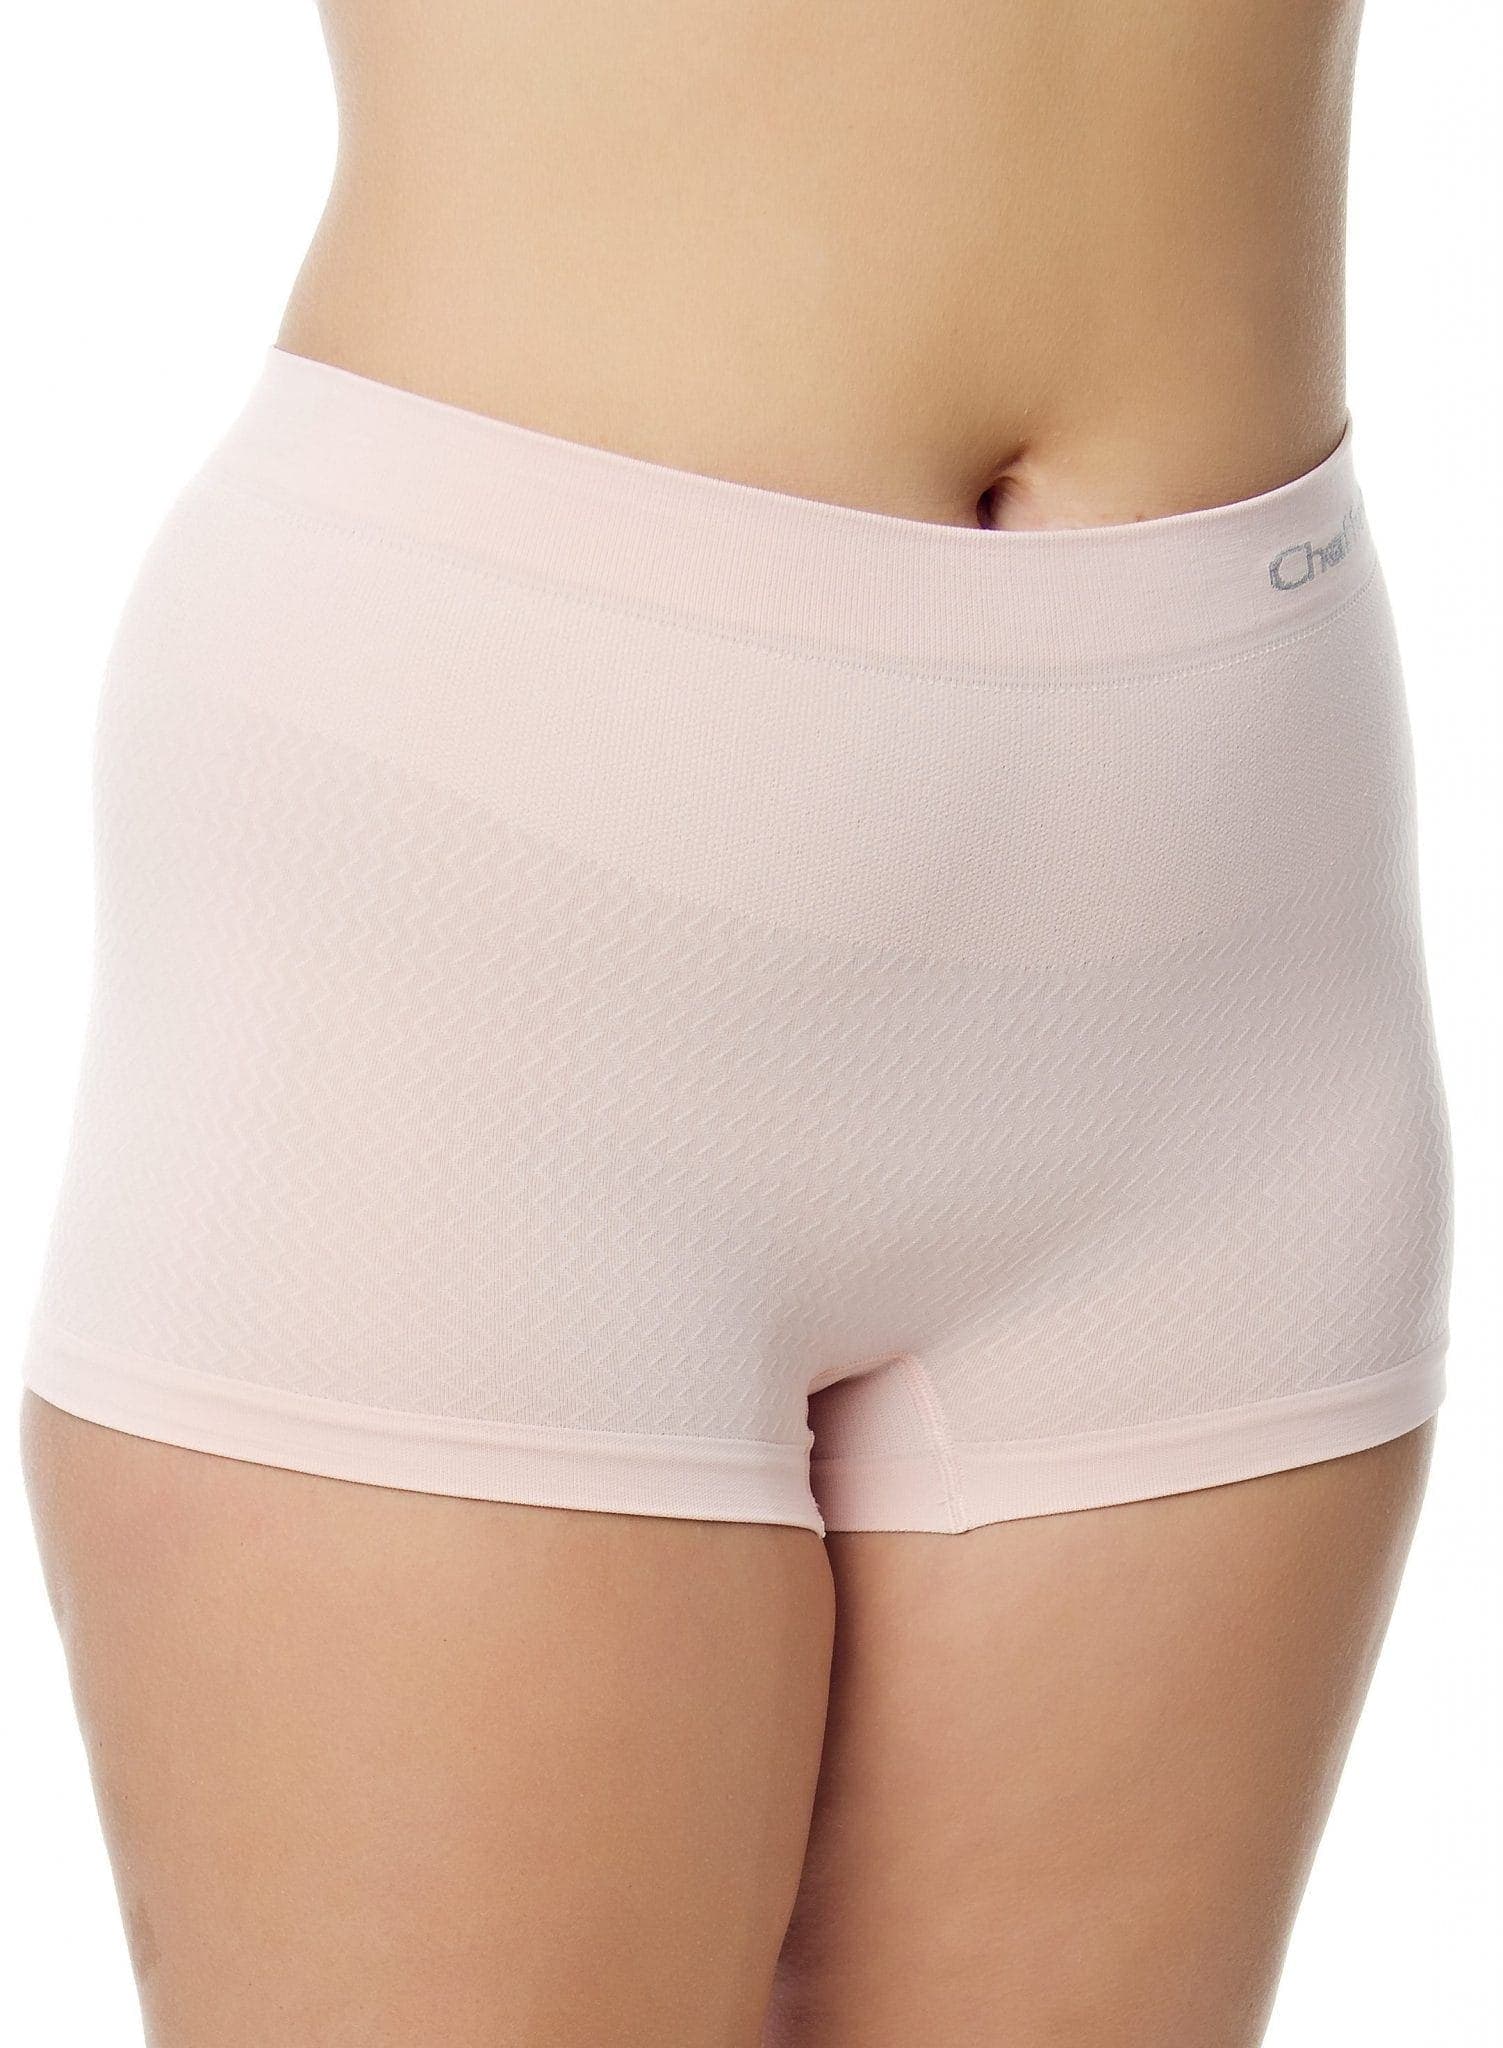 Womens boxer shorts briefs  Shop underwear for women made in